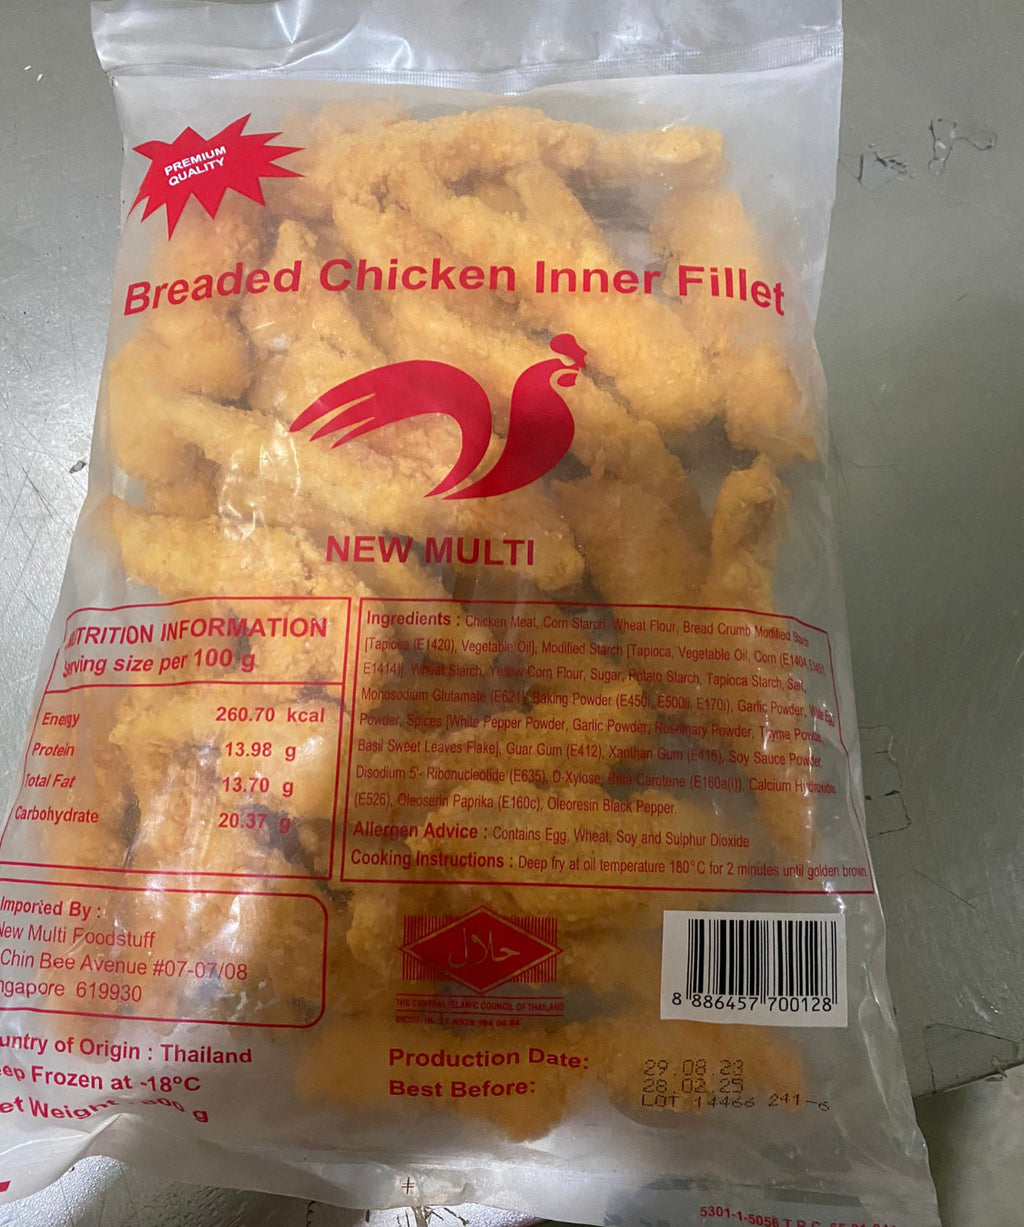 Premier /Falah / Farmland - Breaded Chicken Inner Fillet / Crispy Strip(1kg)